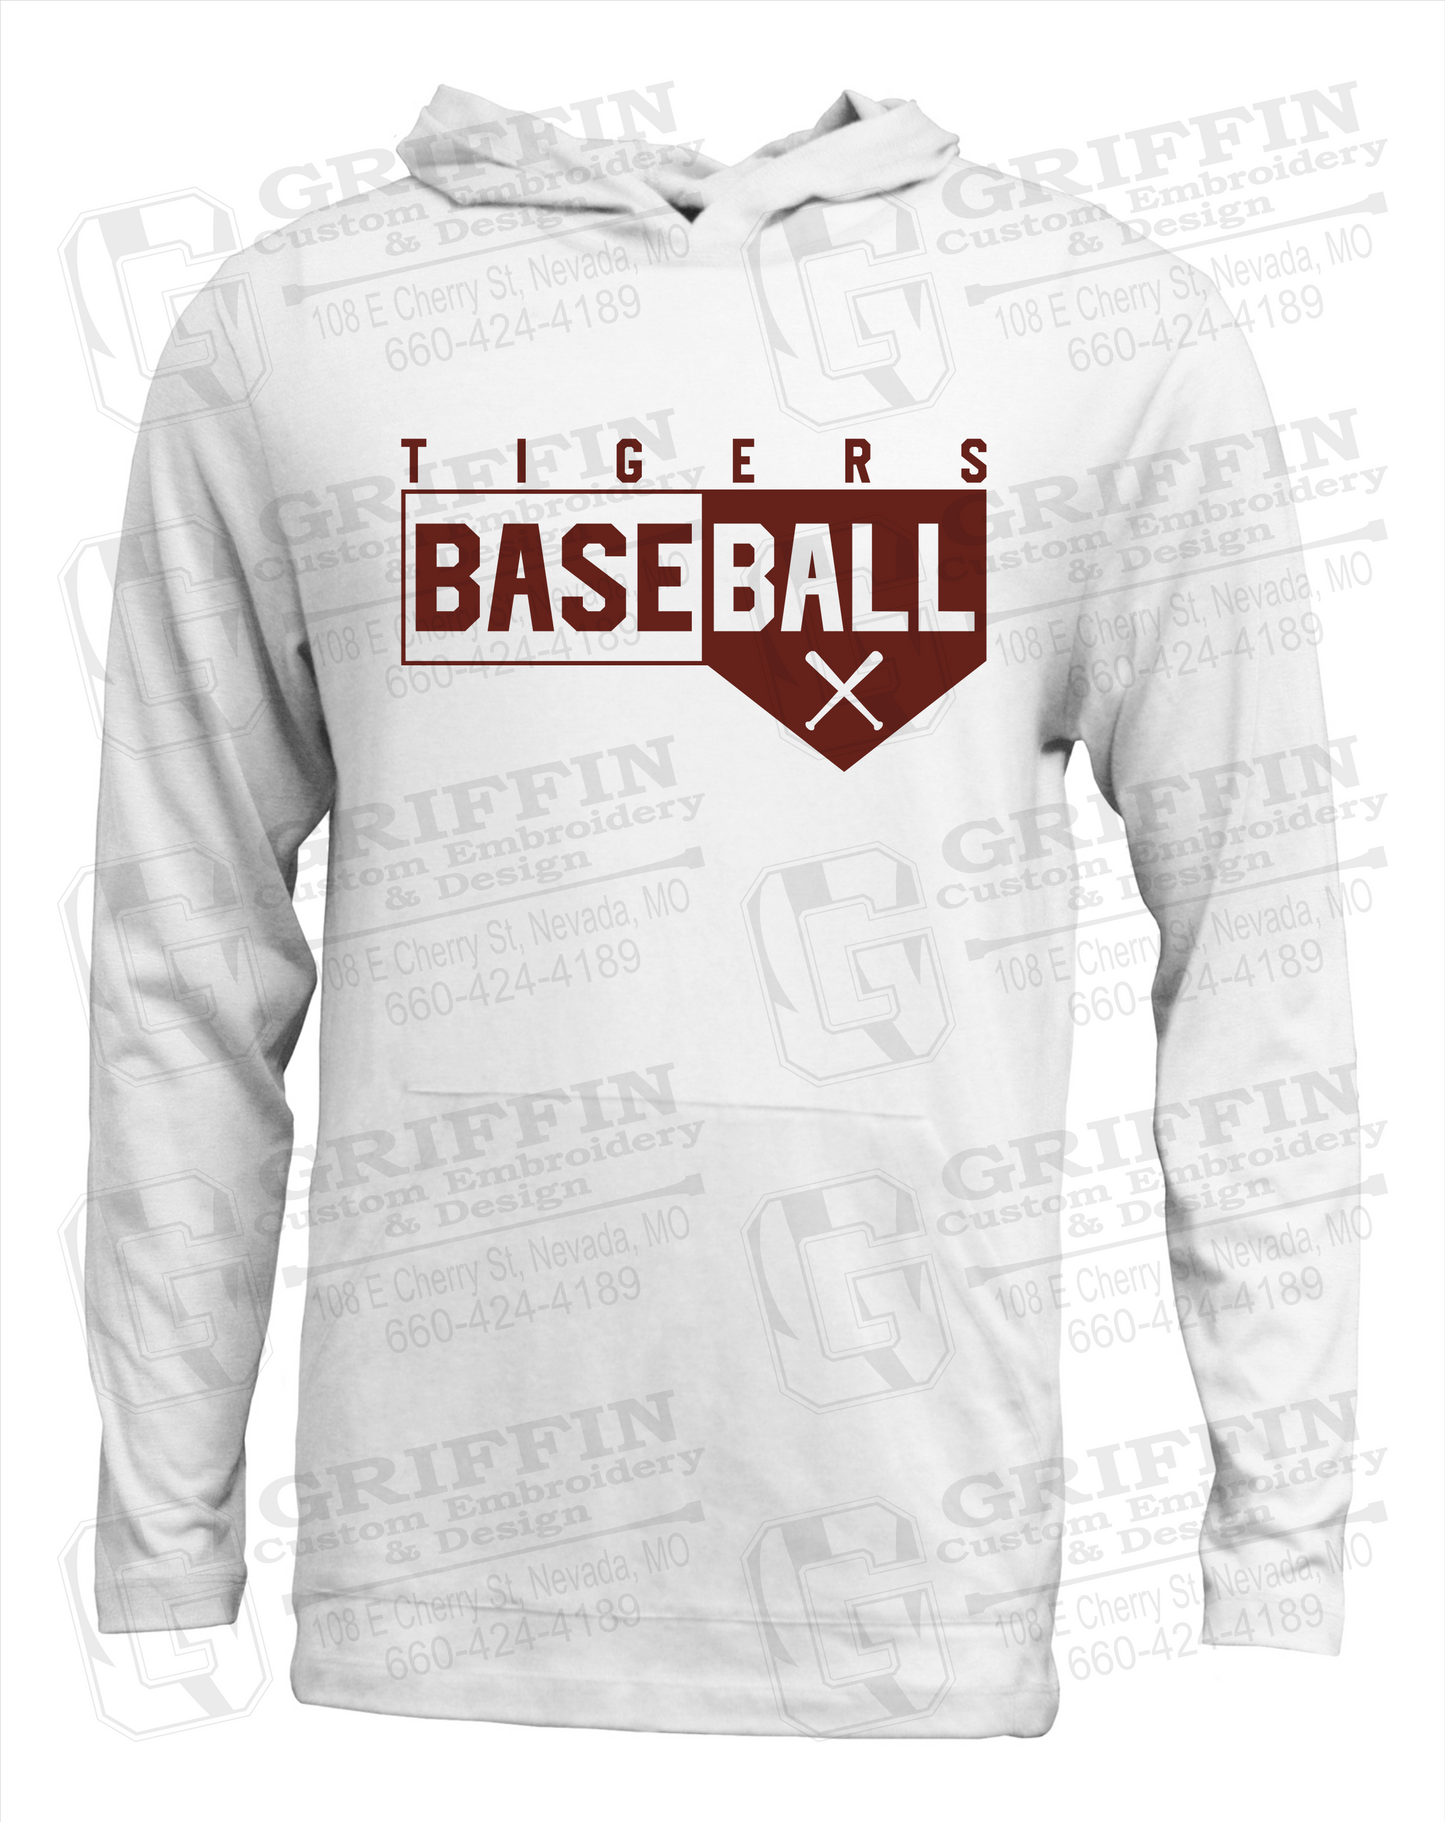 Soft-Tek T-Shirt Hoodie - Baseball - Nevada Tigers 24-X